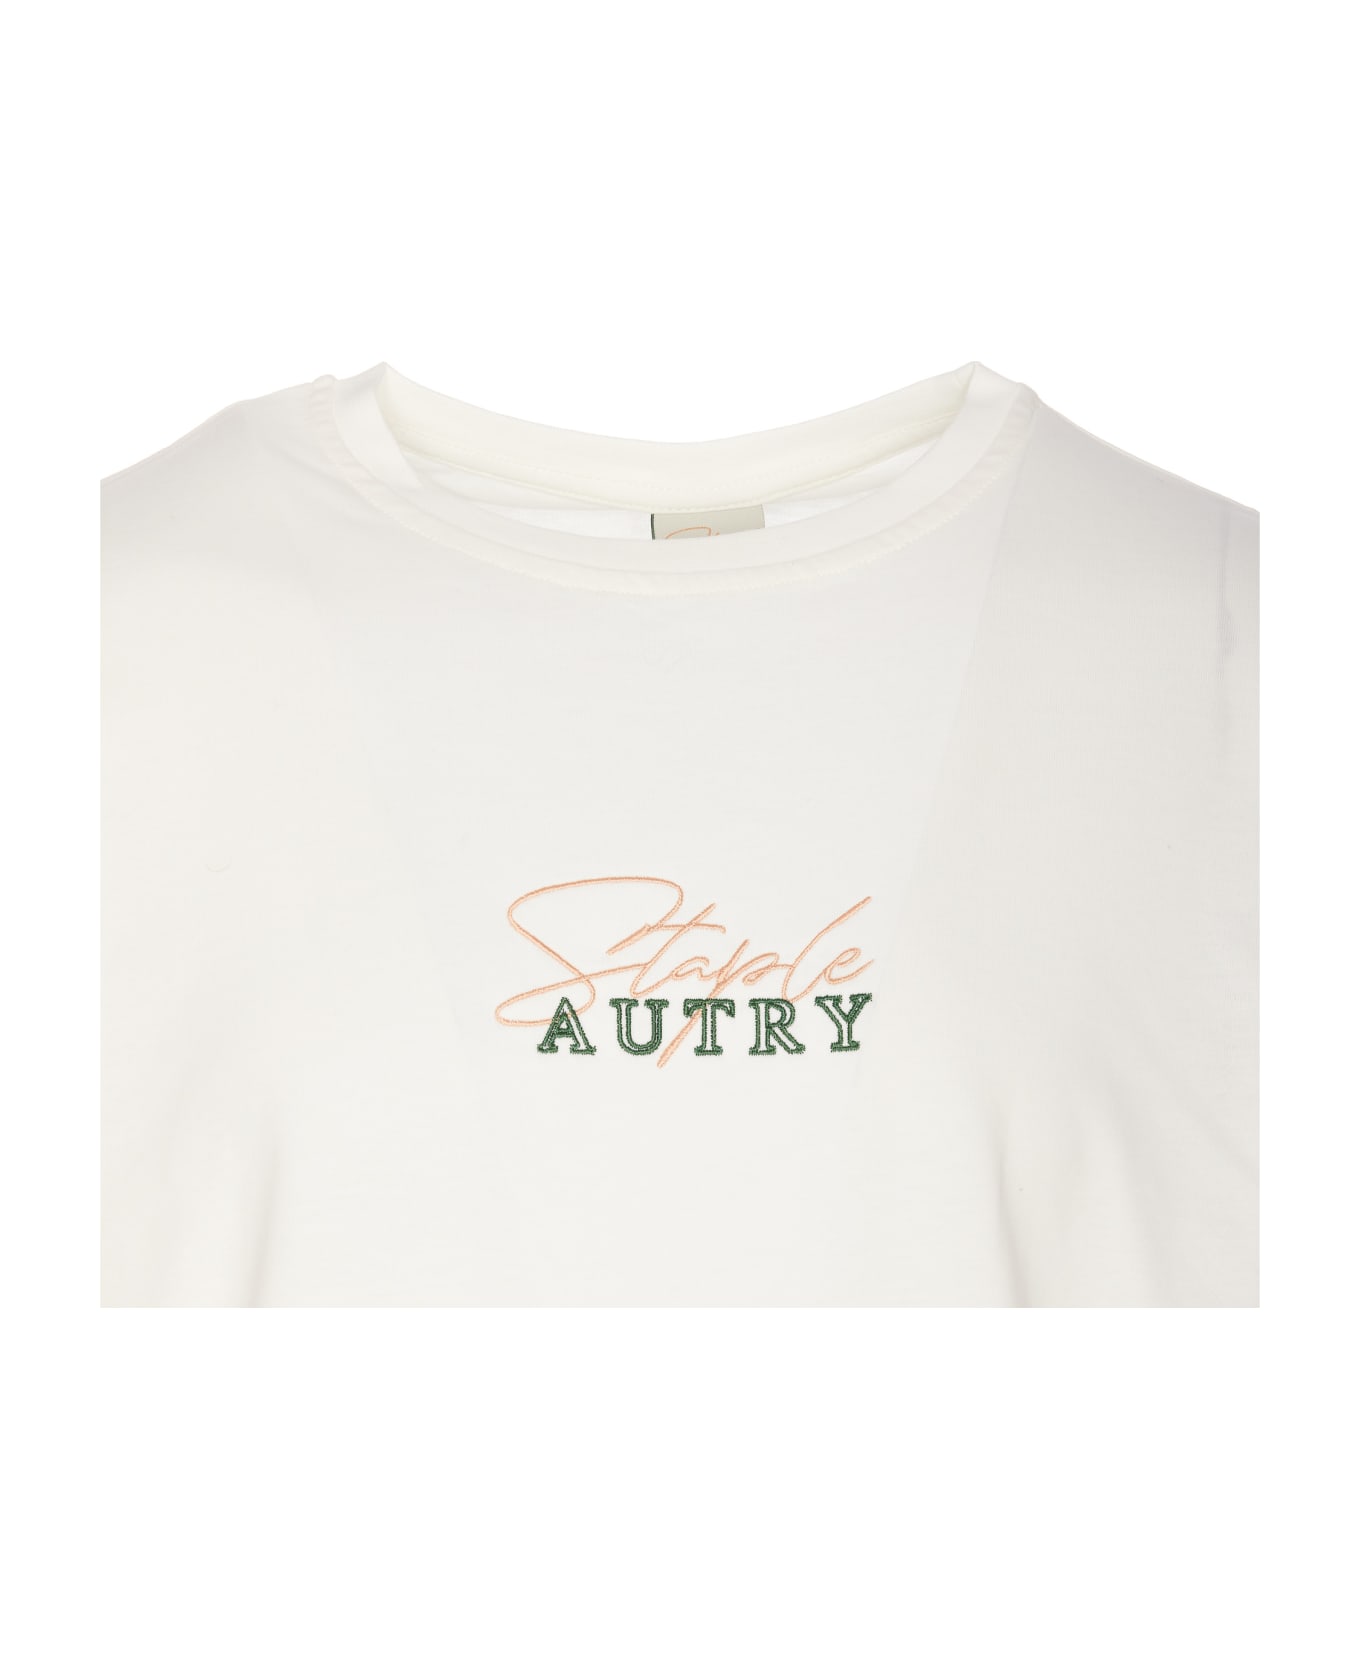 Autry Jeff Staple Crew-neck T-shirt - White